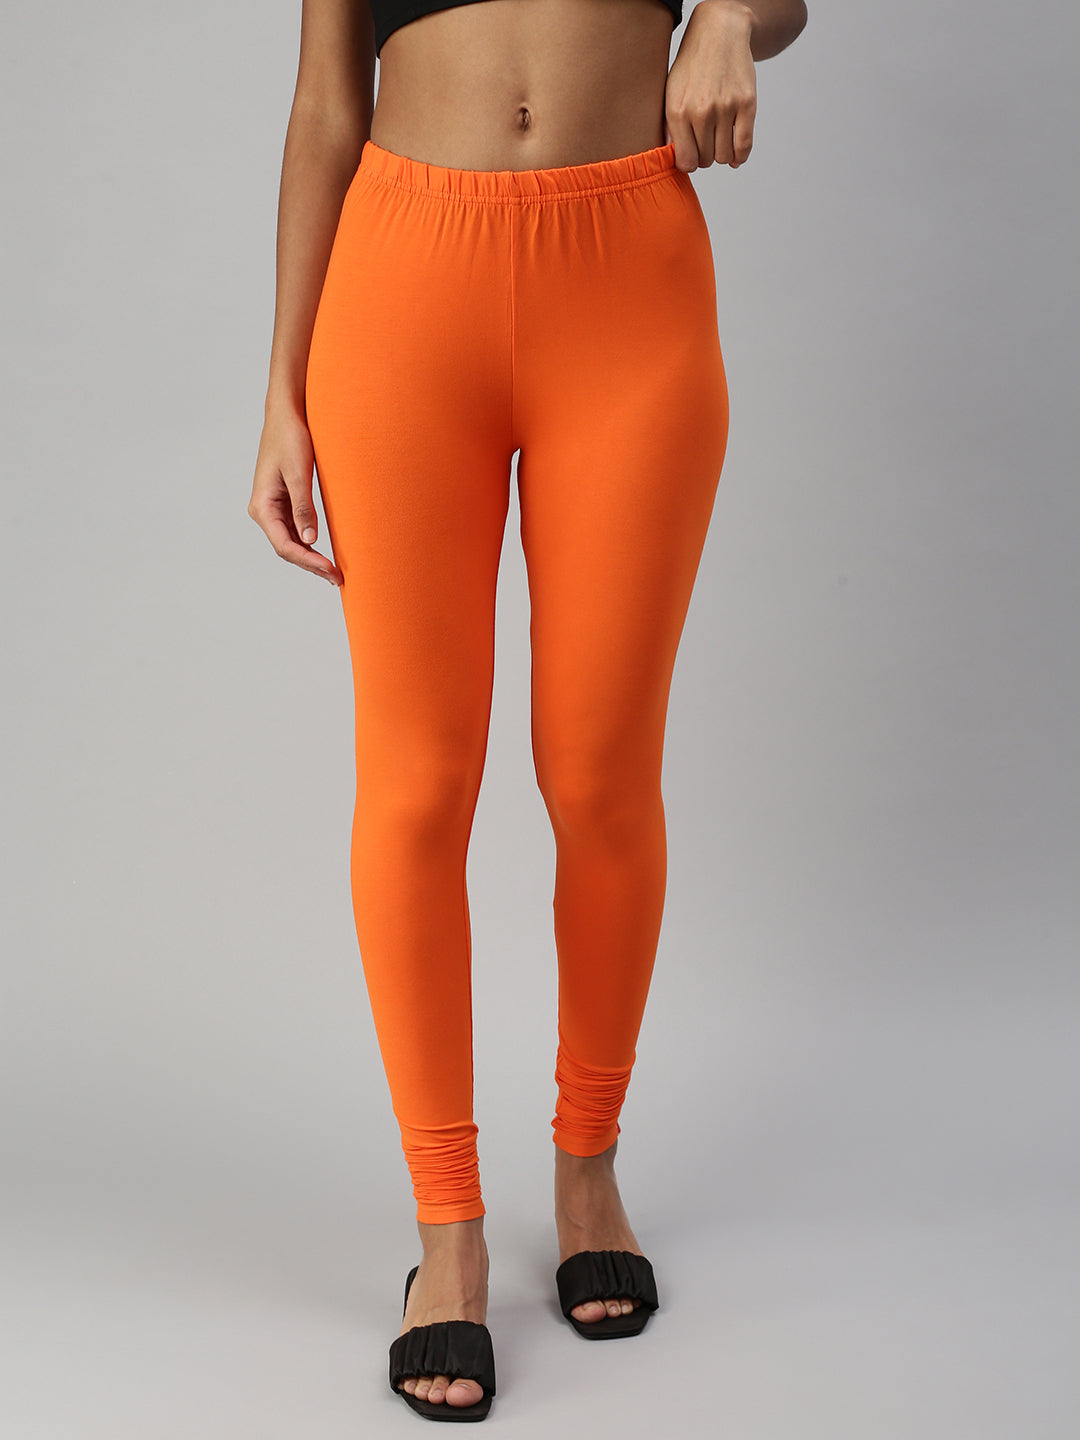 Get Stylish Orange Churidar Leggings from Prisma